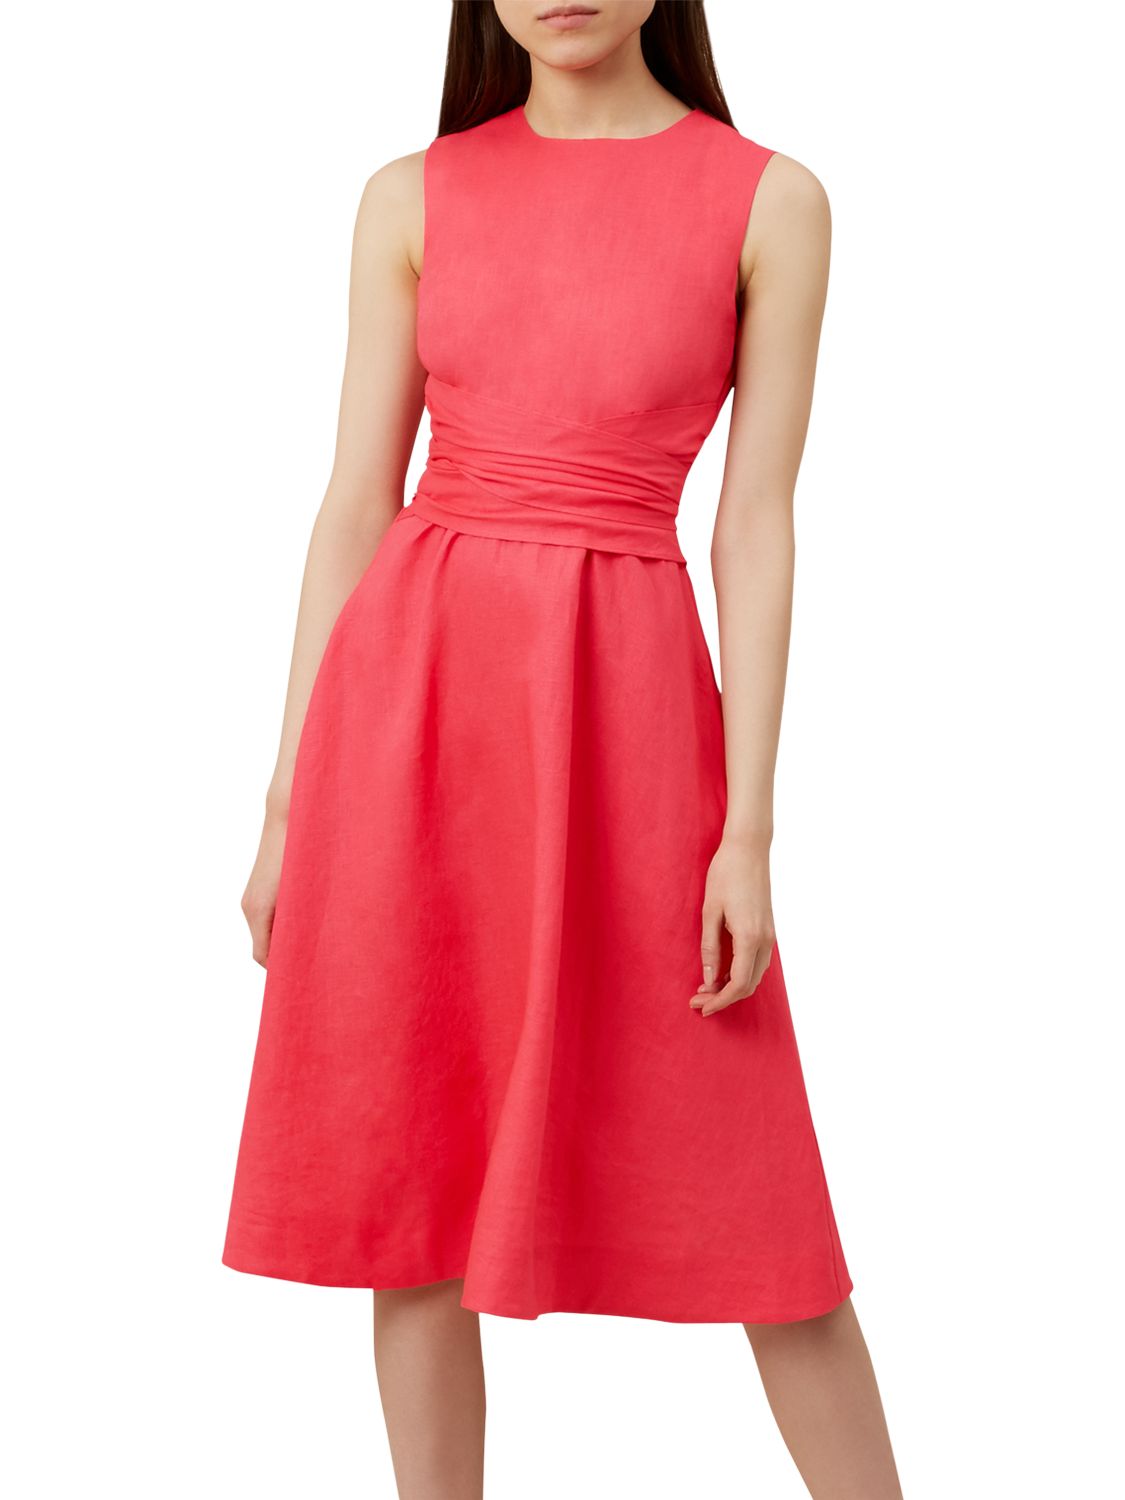 Hobbs Twitchill Dress, Flamingo Pink at John Lewis & Partners